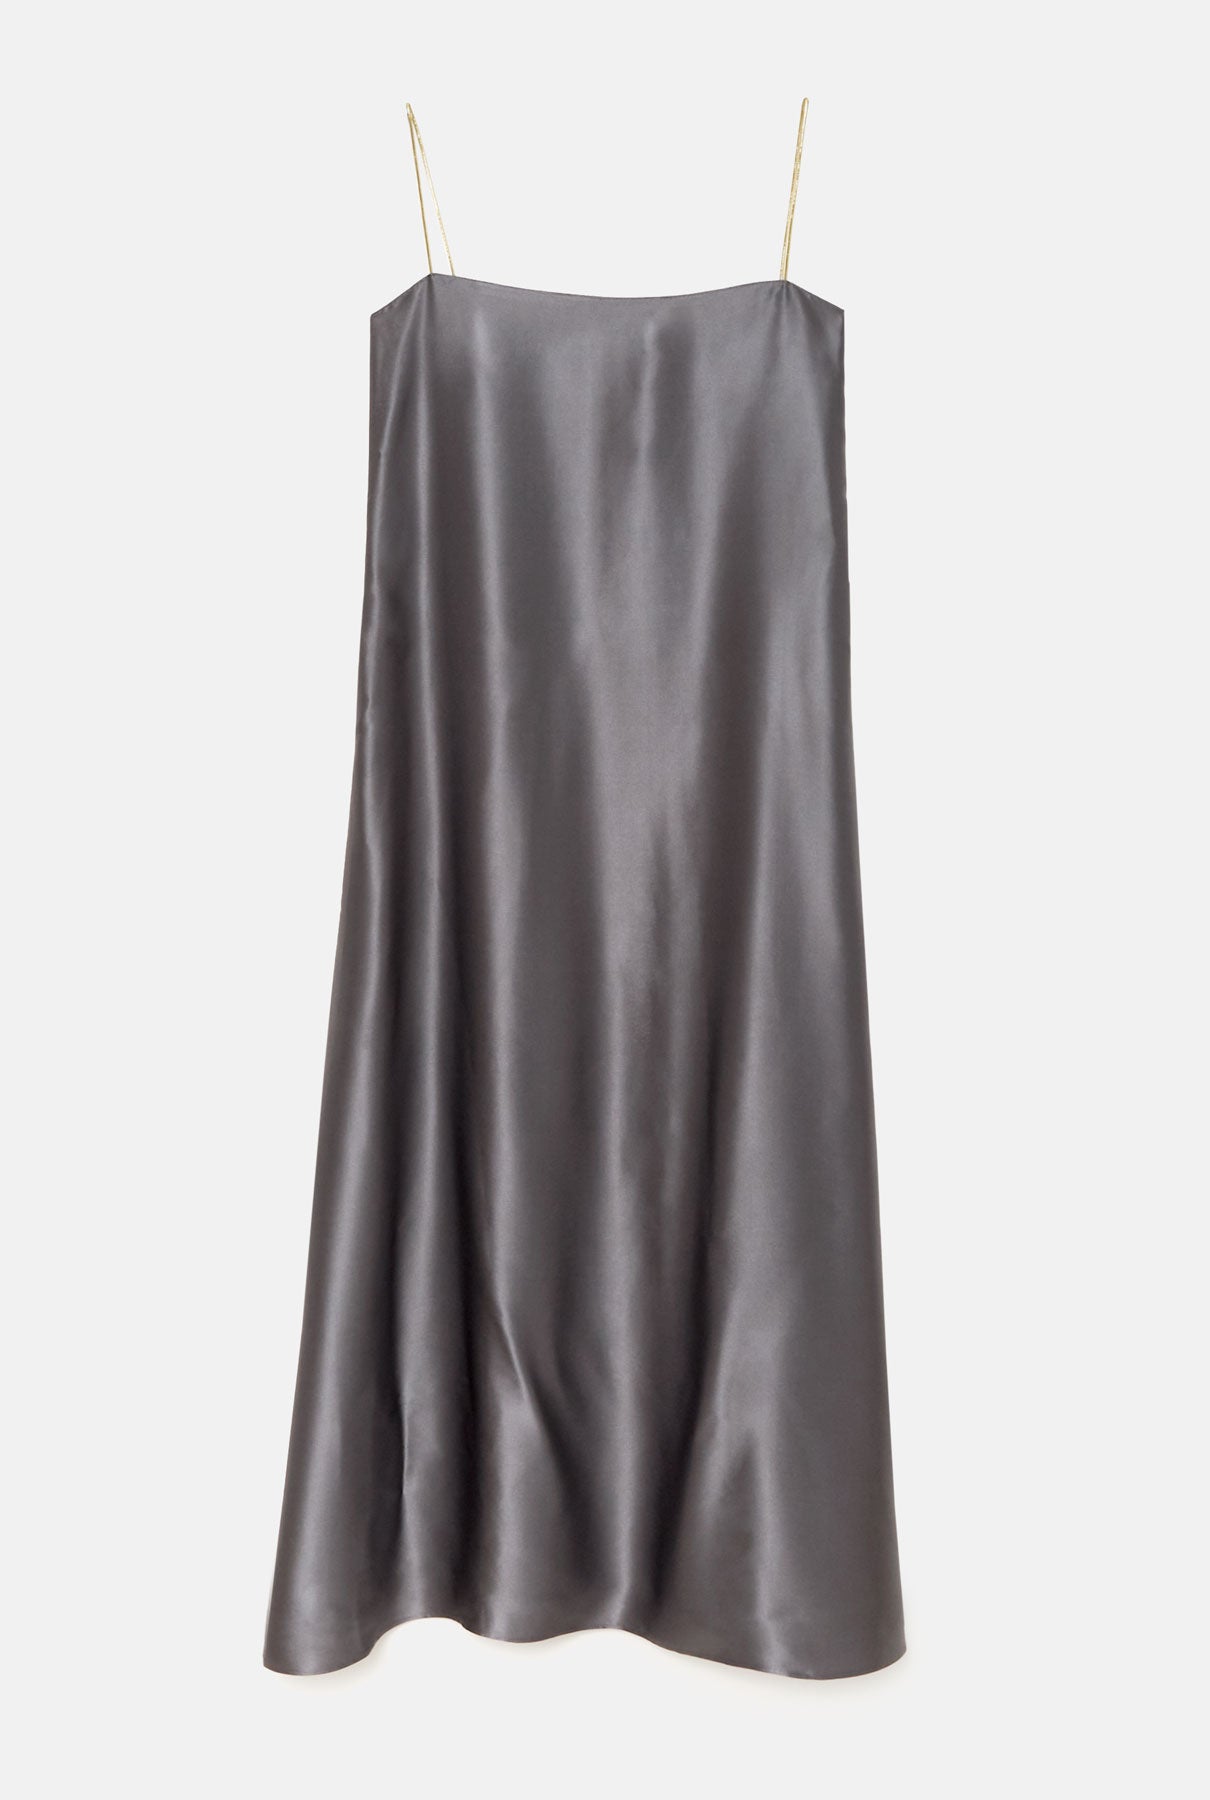 Flor extralong dress grey Dresses Atelier Aletheia 